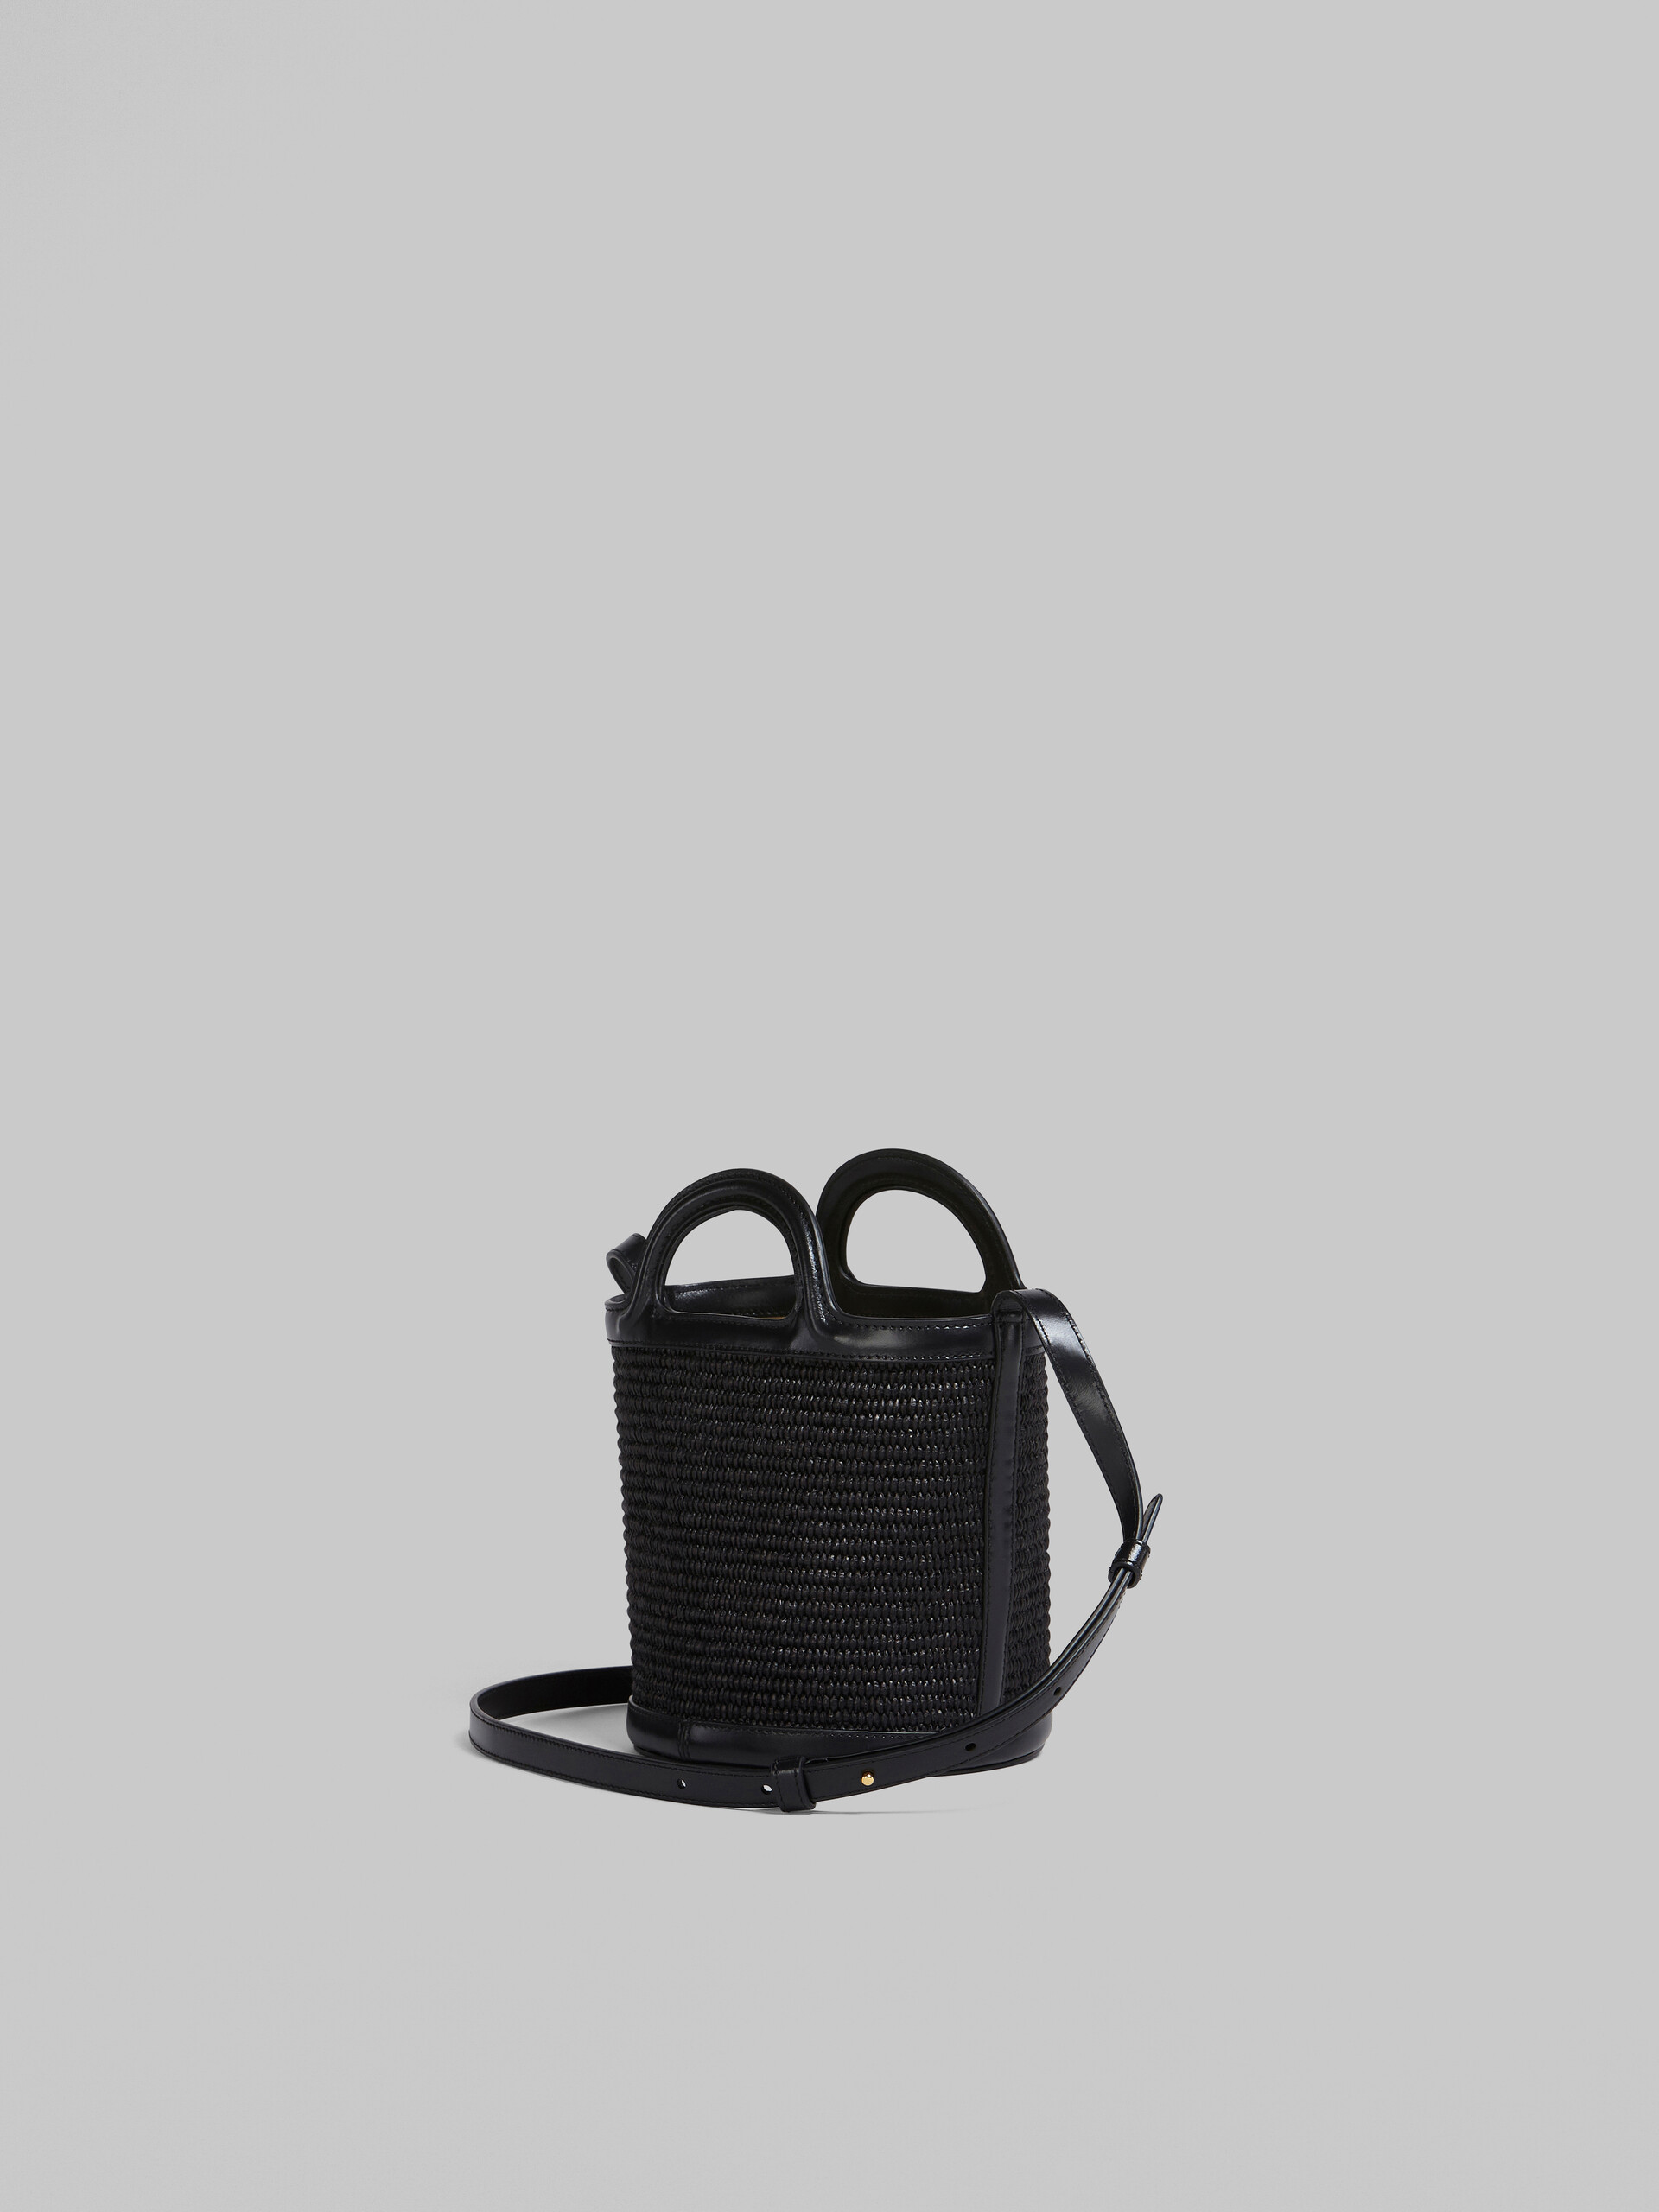 TROPICALIA mini bucket bag in black leather and raffia - Shoulder Bag - Image 3